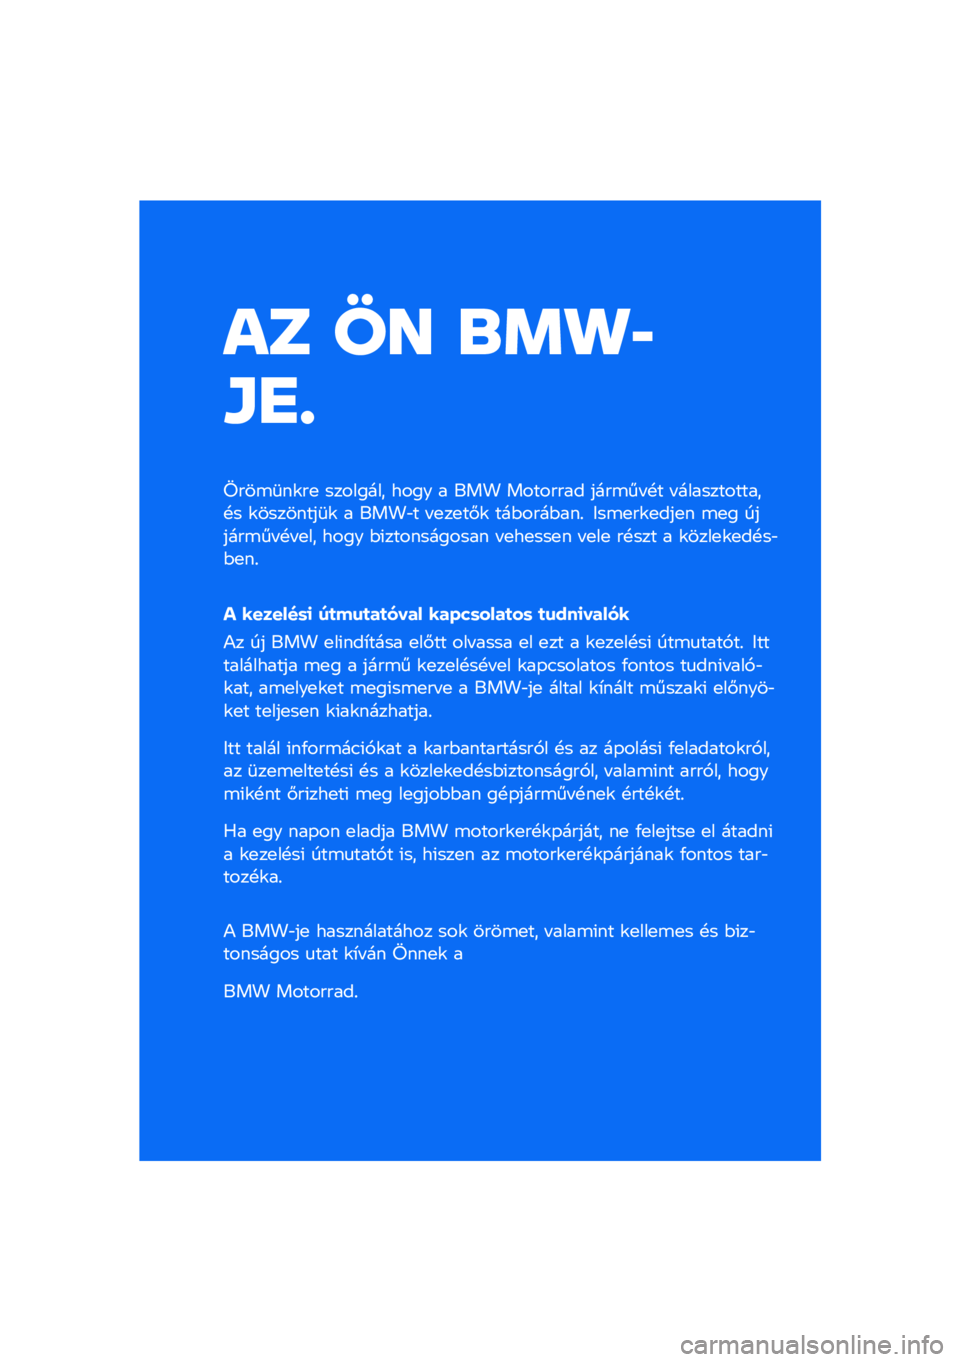 BMW MOTORRAD R NINE T SCRAMBLER 2020  Kezelési útmutató (in Hungarian) �� �� �\b�	�
�
�\f�
�
����\b�	��\f��
 �������� ���� � ��� �������� ����\b�� �!� � ������������!� �\f��������	�\f � ����"� � �
��
��#�\